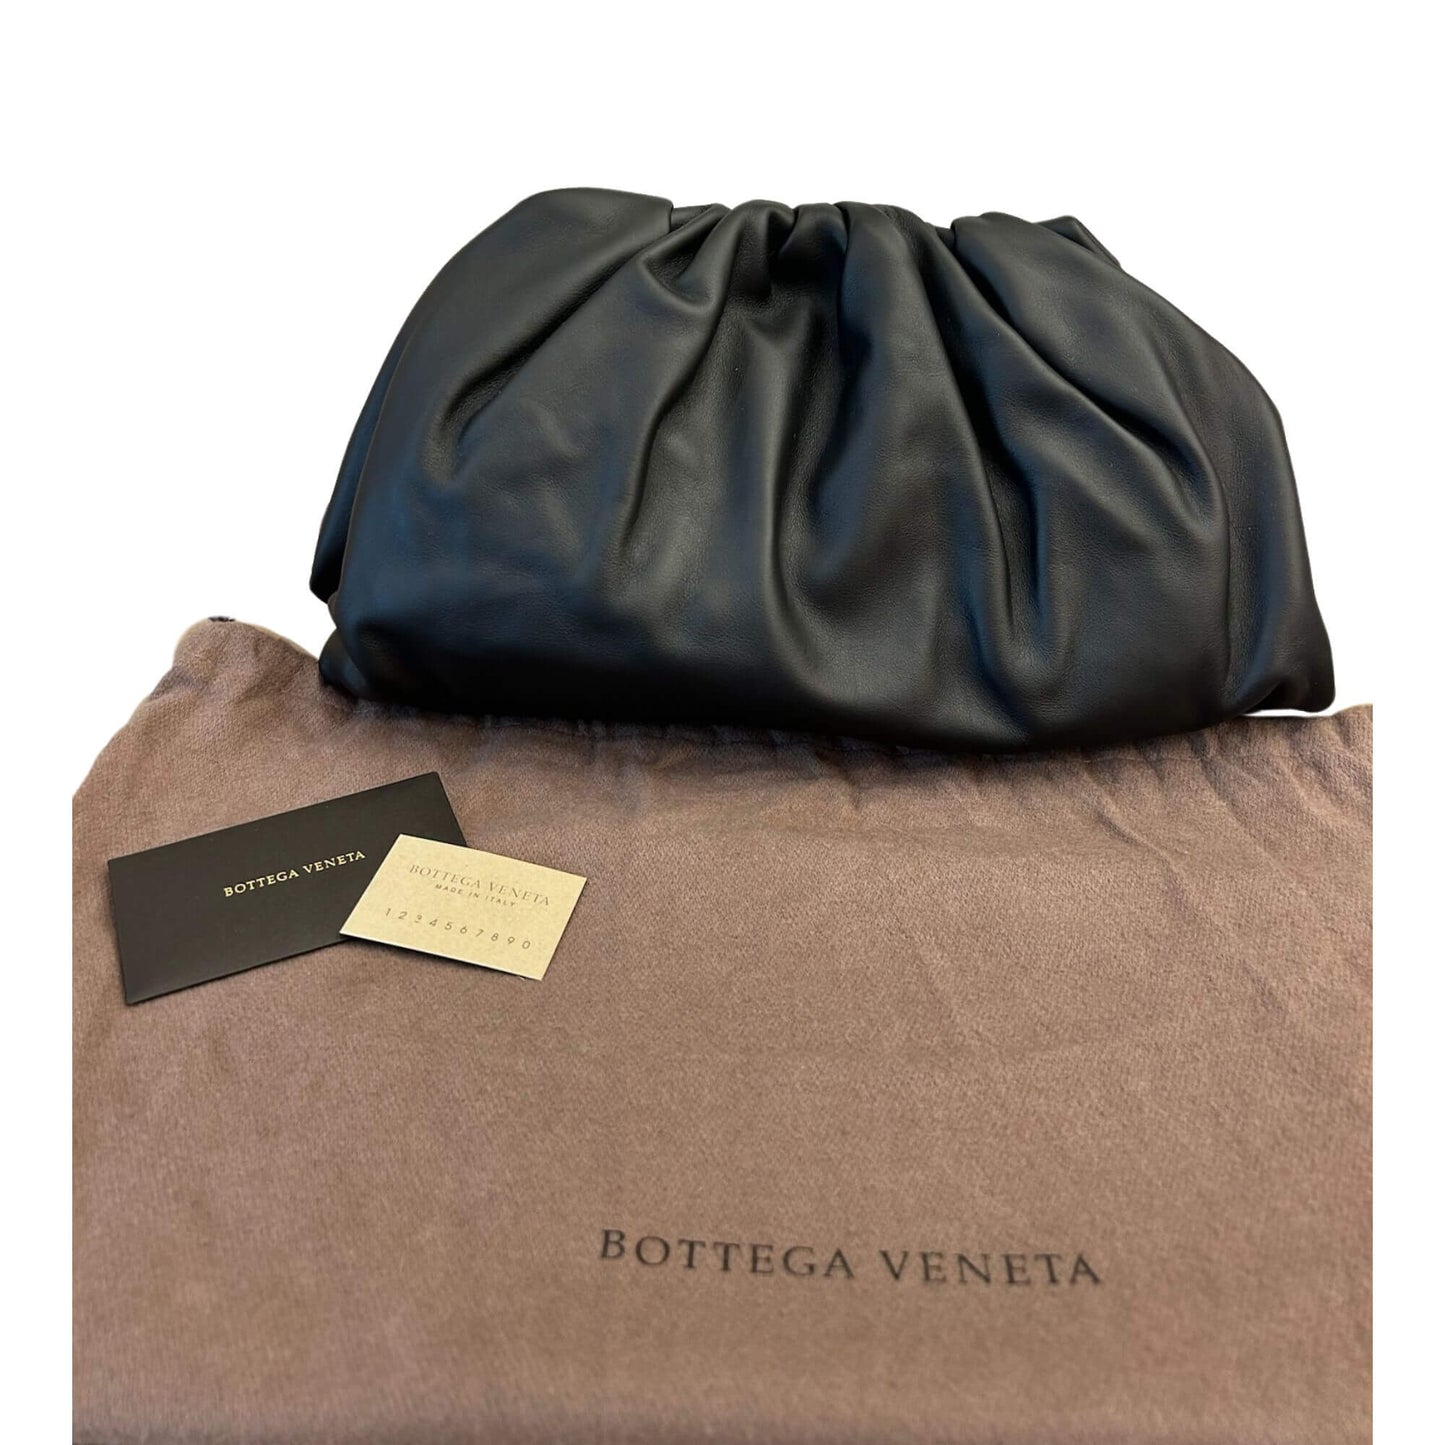 BOTTEGA VENETA THE BLACK POUCH LEATHER BAG